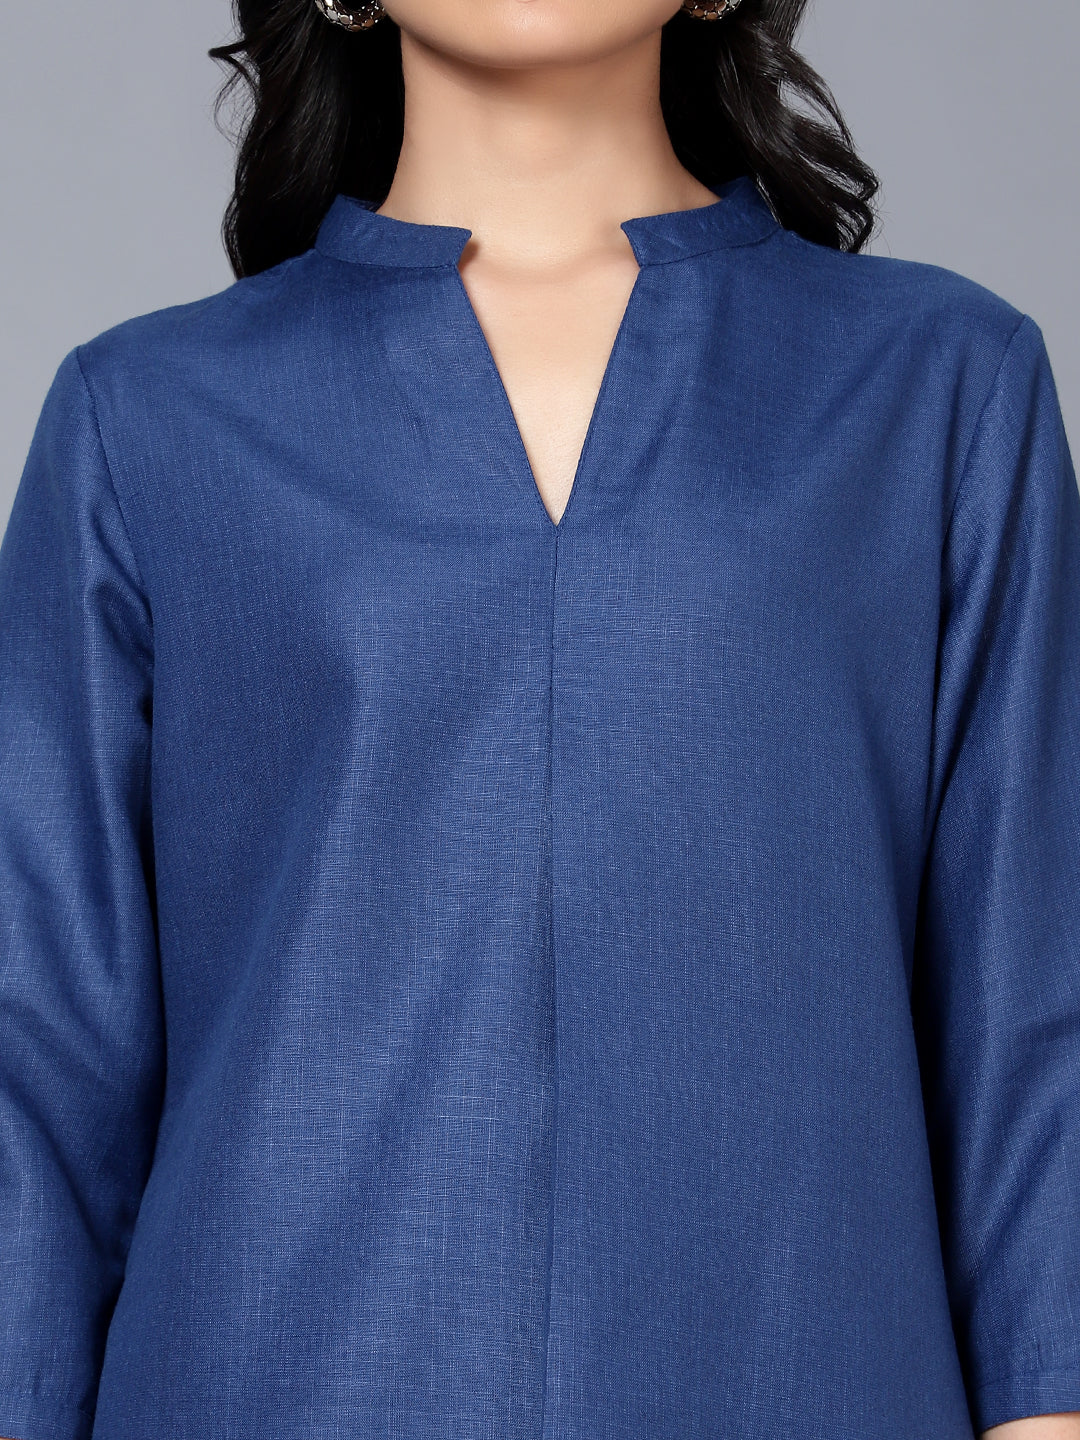 Buy Bani Women Blue Co-Ord (Set of 2) online